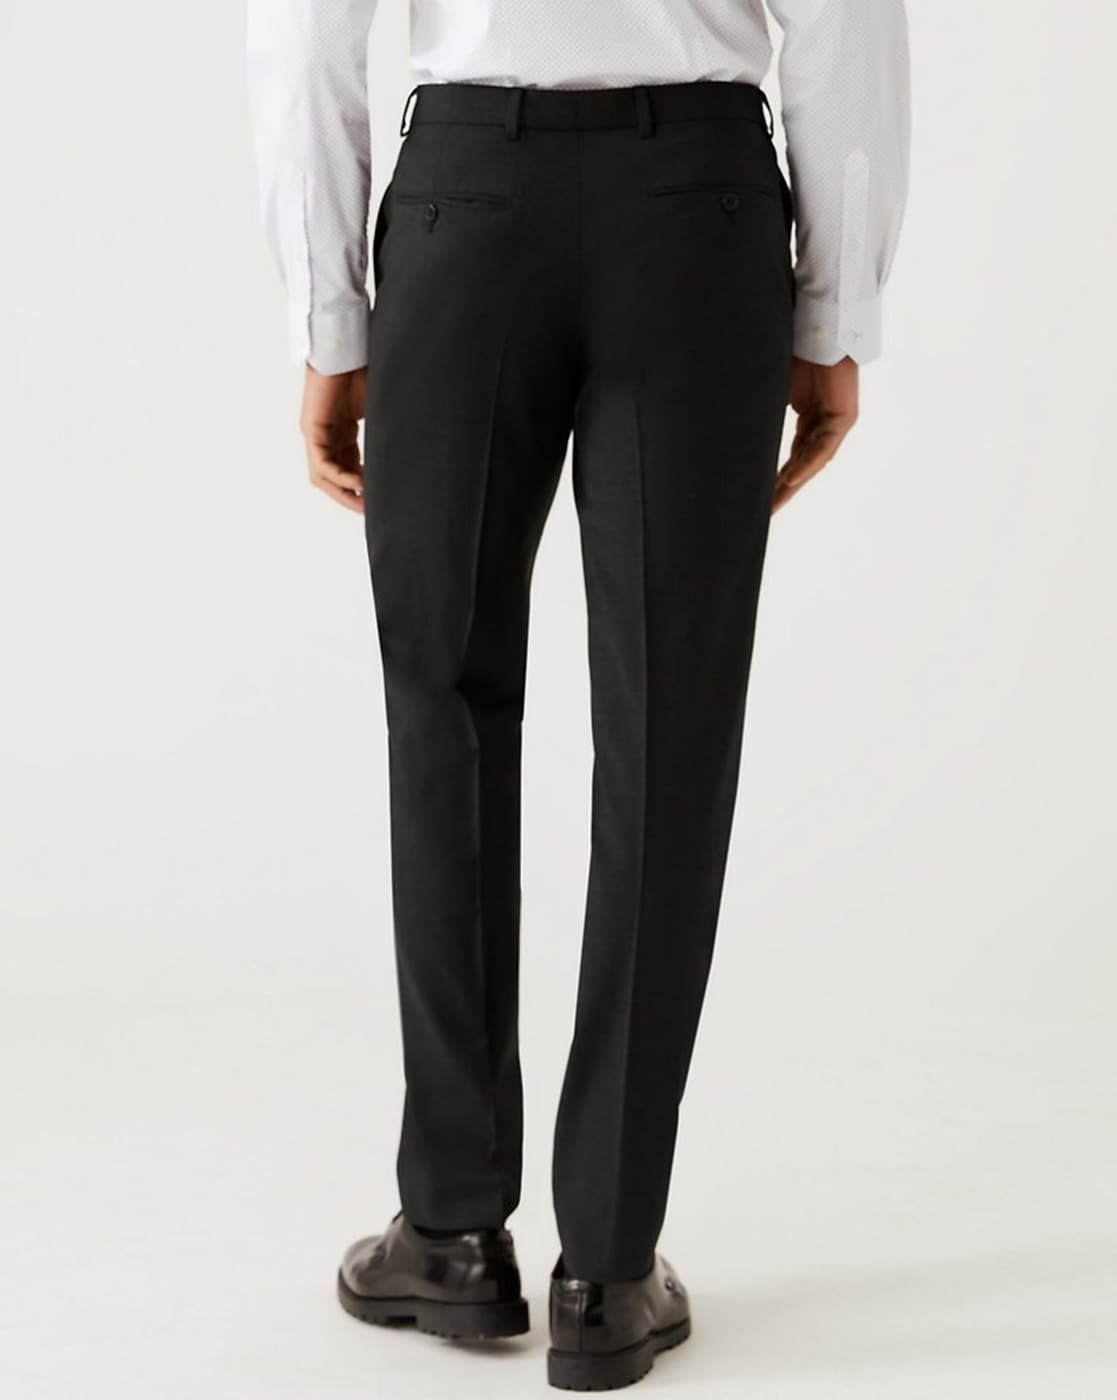 Buy Black Pantsuit for Women Black Formal Pants Suit for Women Online in  India  Etsy